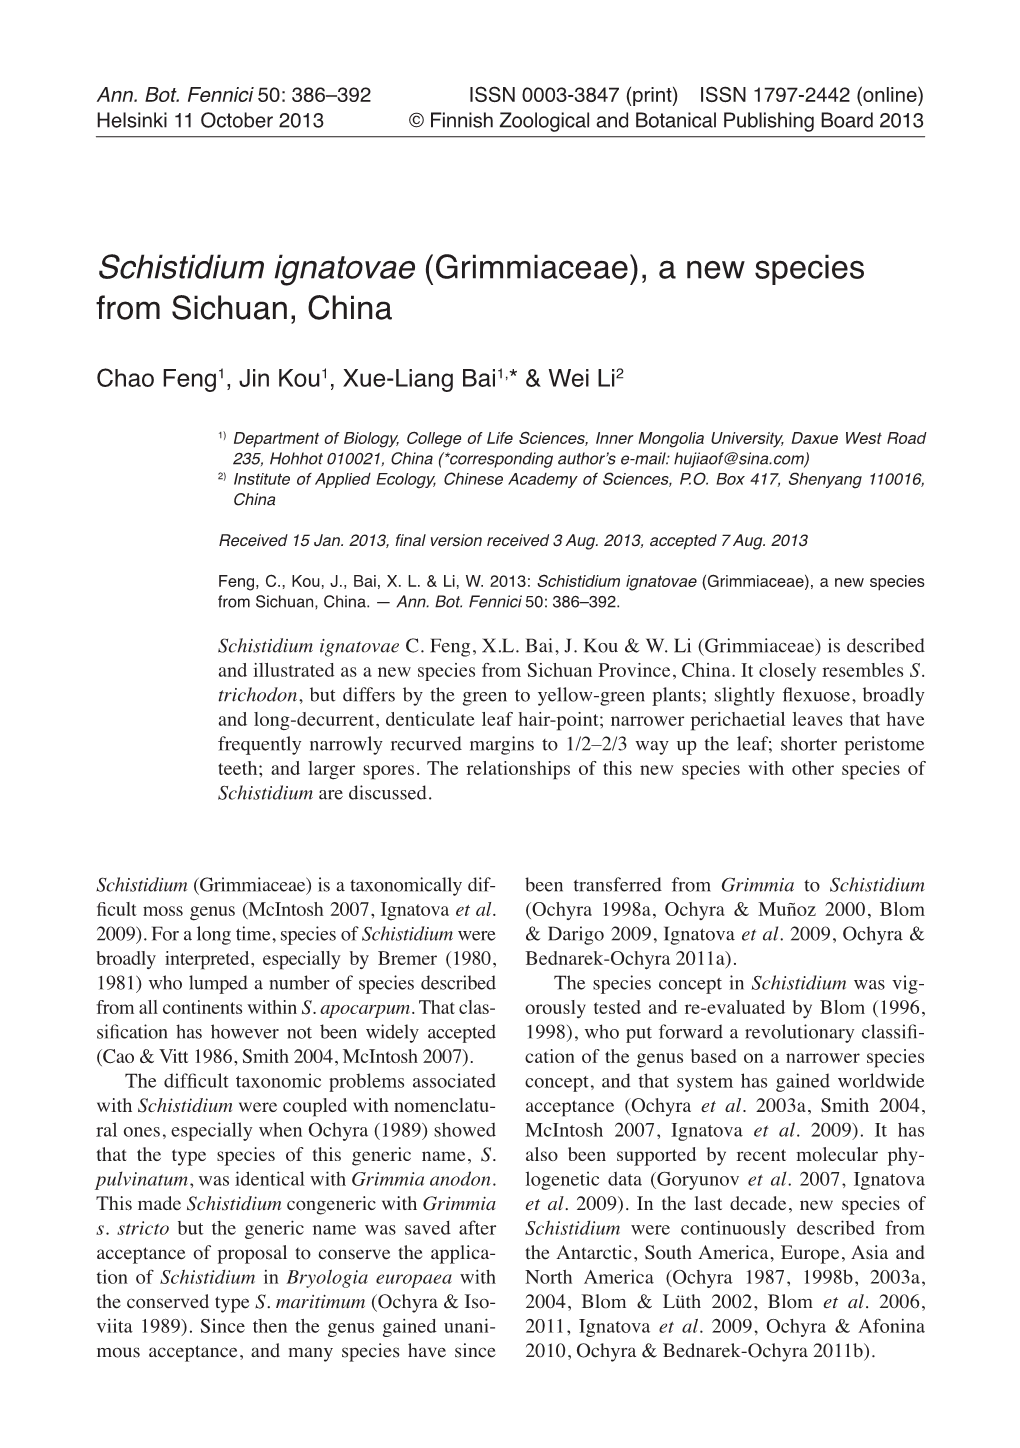 Schistidium Ignatovae (Grimmiaceae), a New Species from Sichuan, China